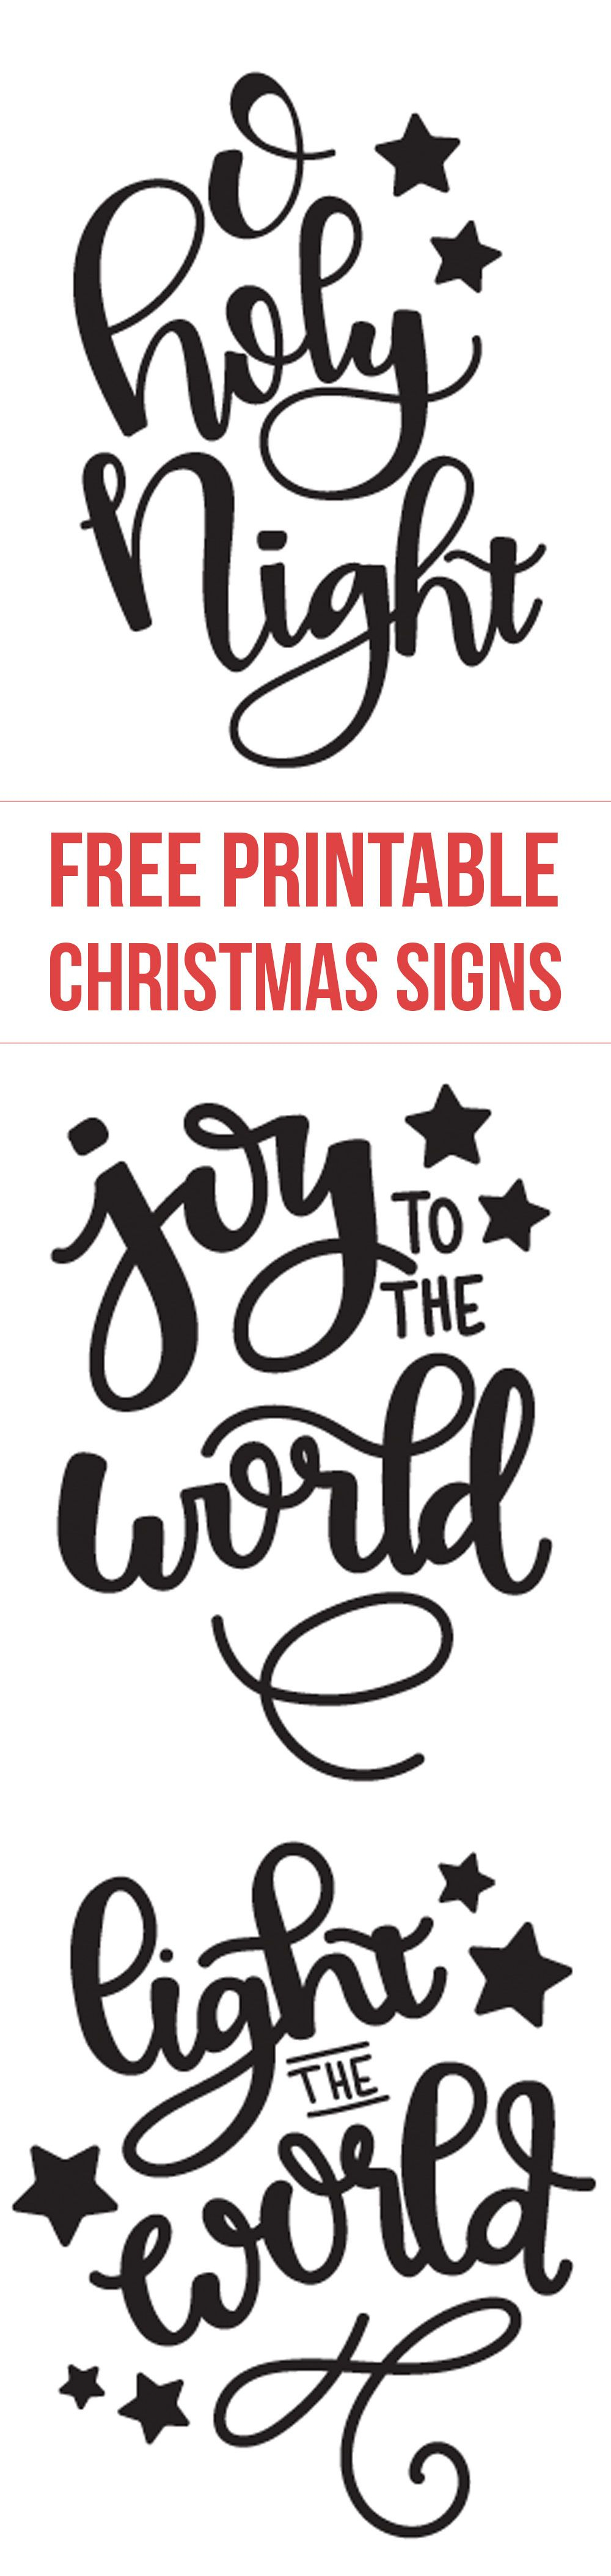 Light The World Designs | Live It. Love It. Lds. | Christmas - Free Printable Christmas Designs